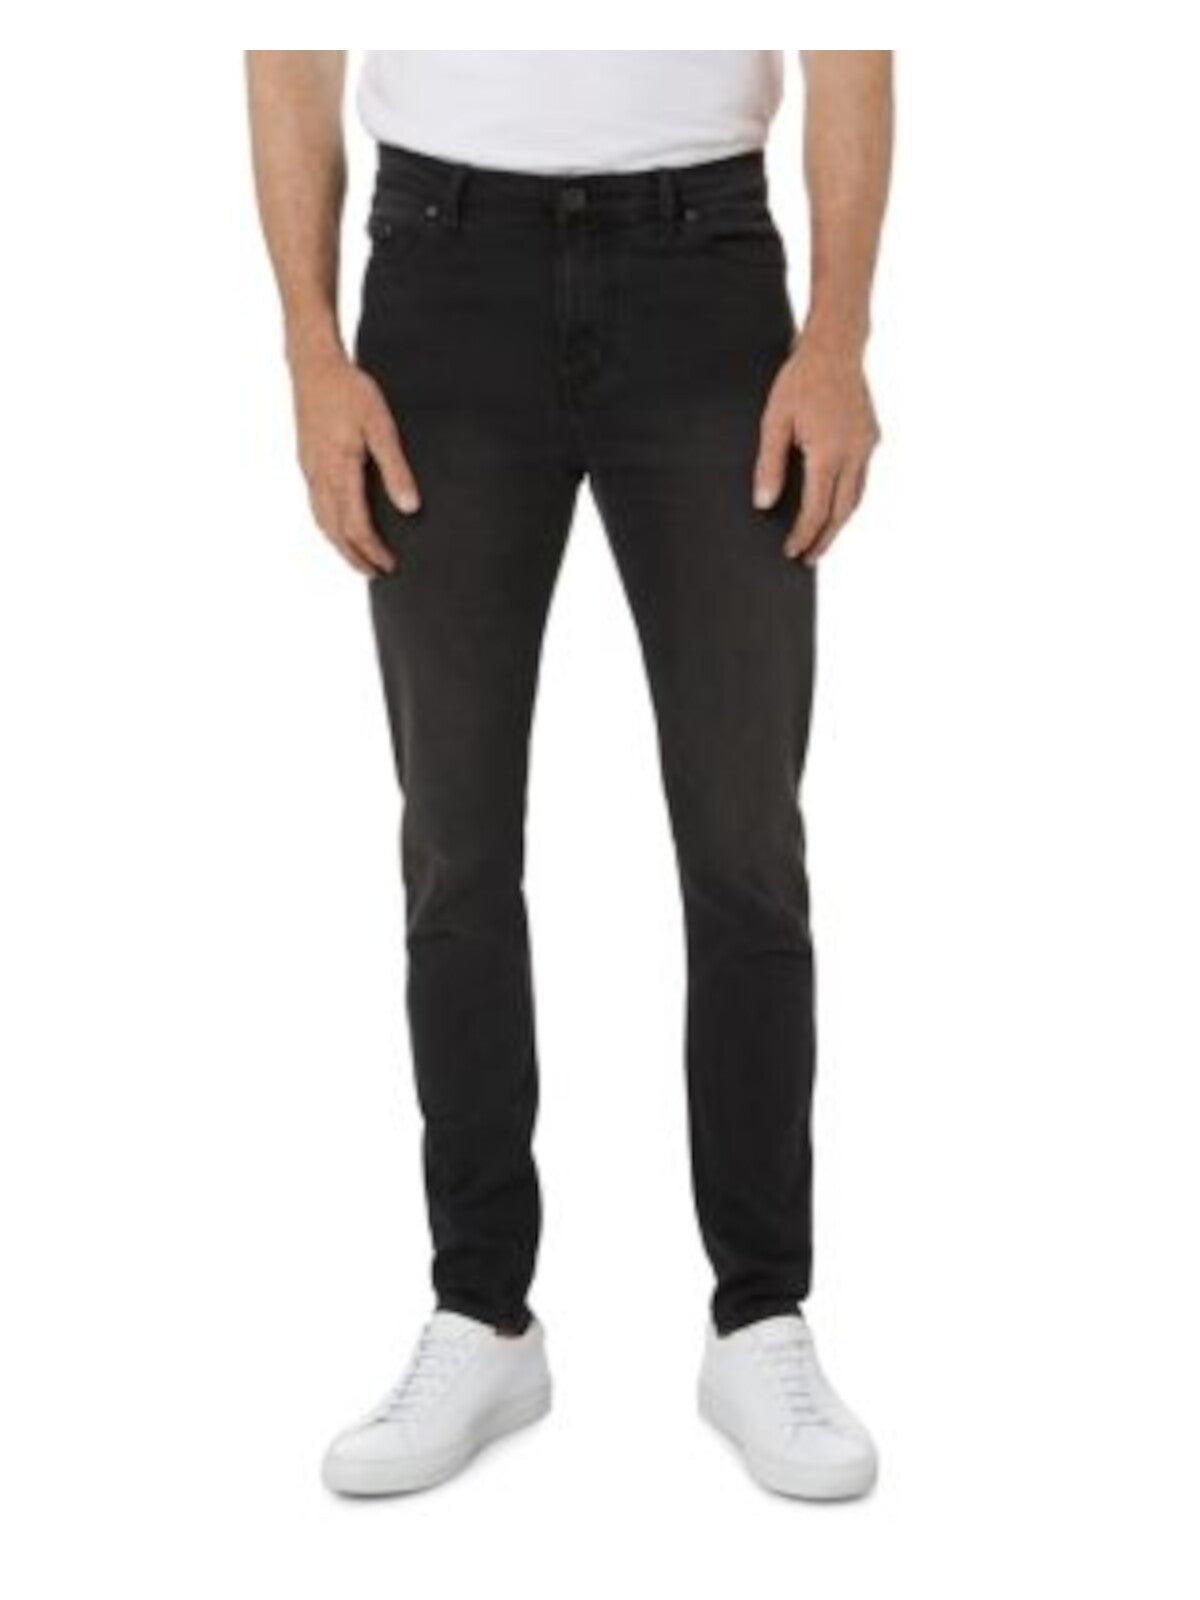 OUTLAND Mens Black Slim Fit Denim Jeans 31R